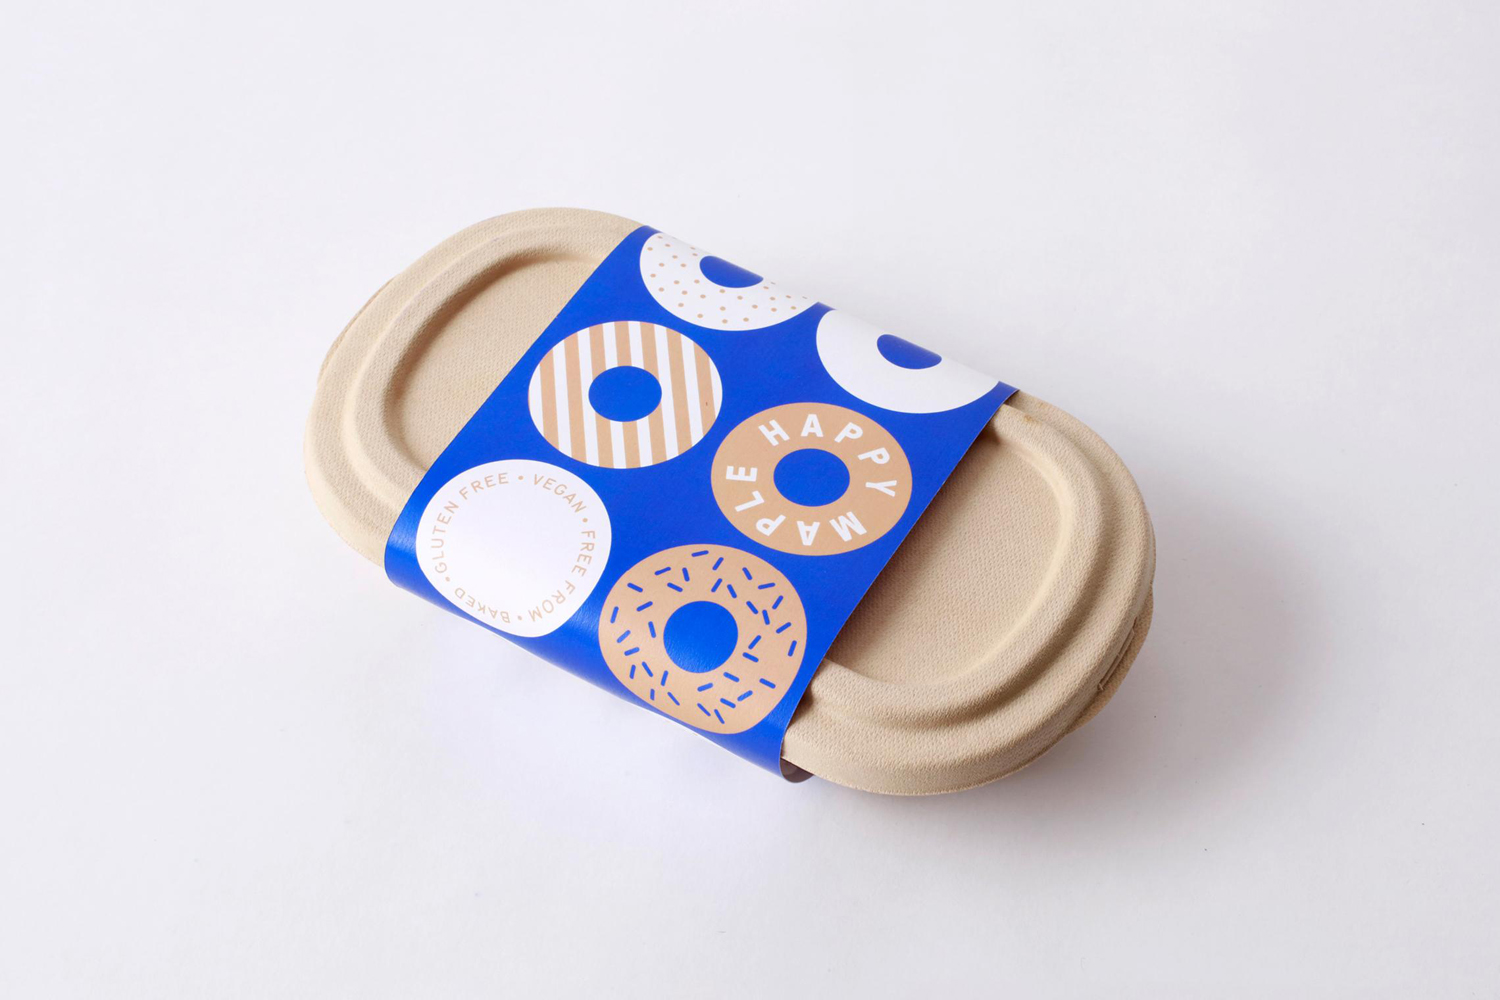 Brand identity and packaging by Sydney-based graphic design studio Garbett for donut bakery Happy Maple. 